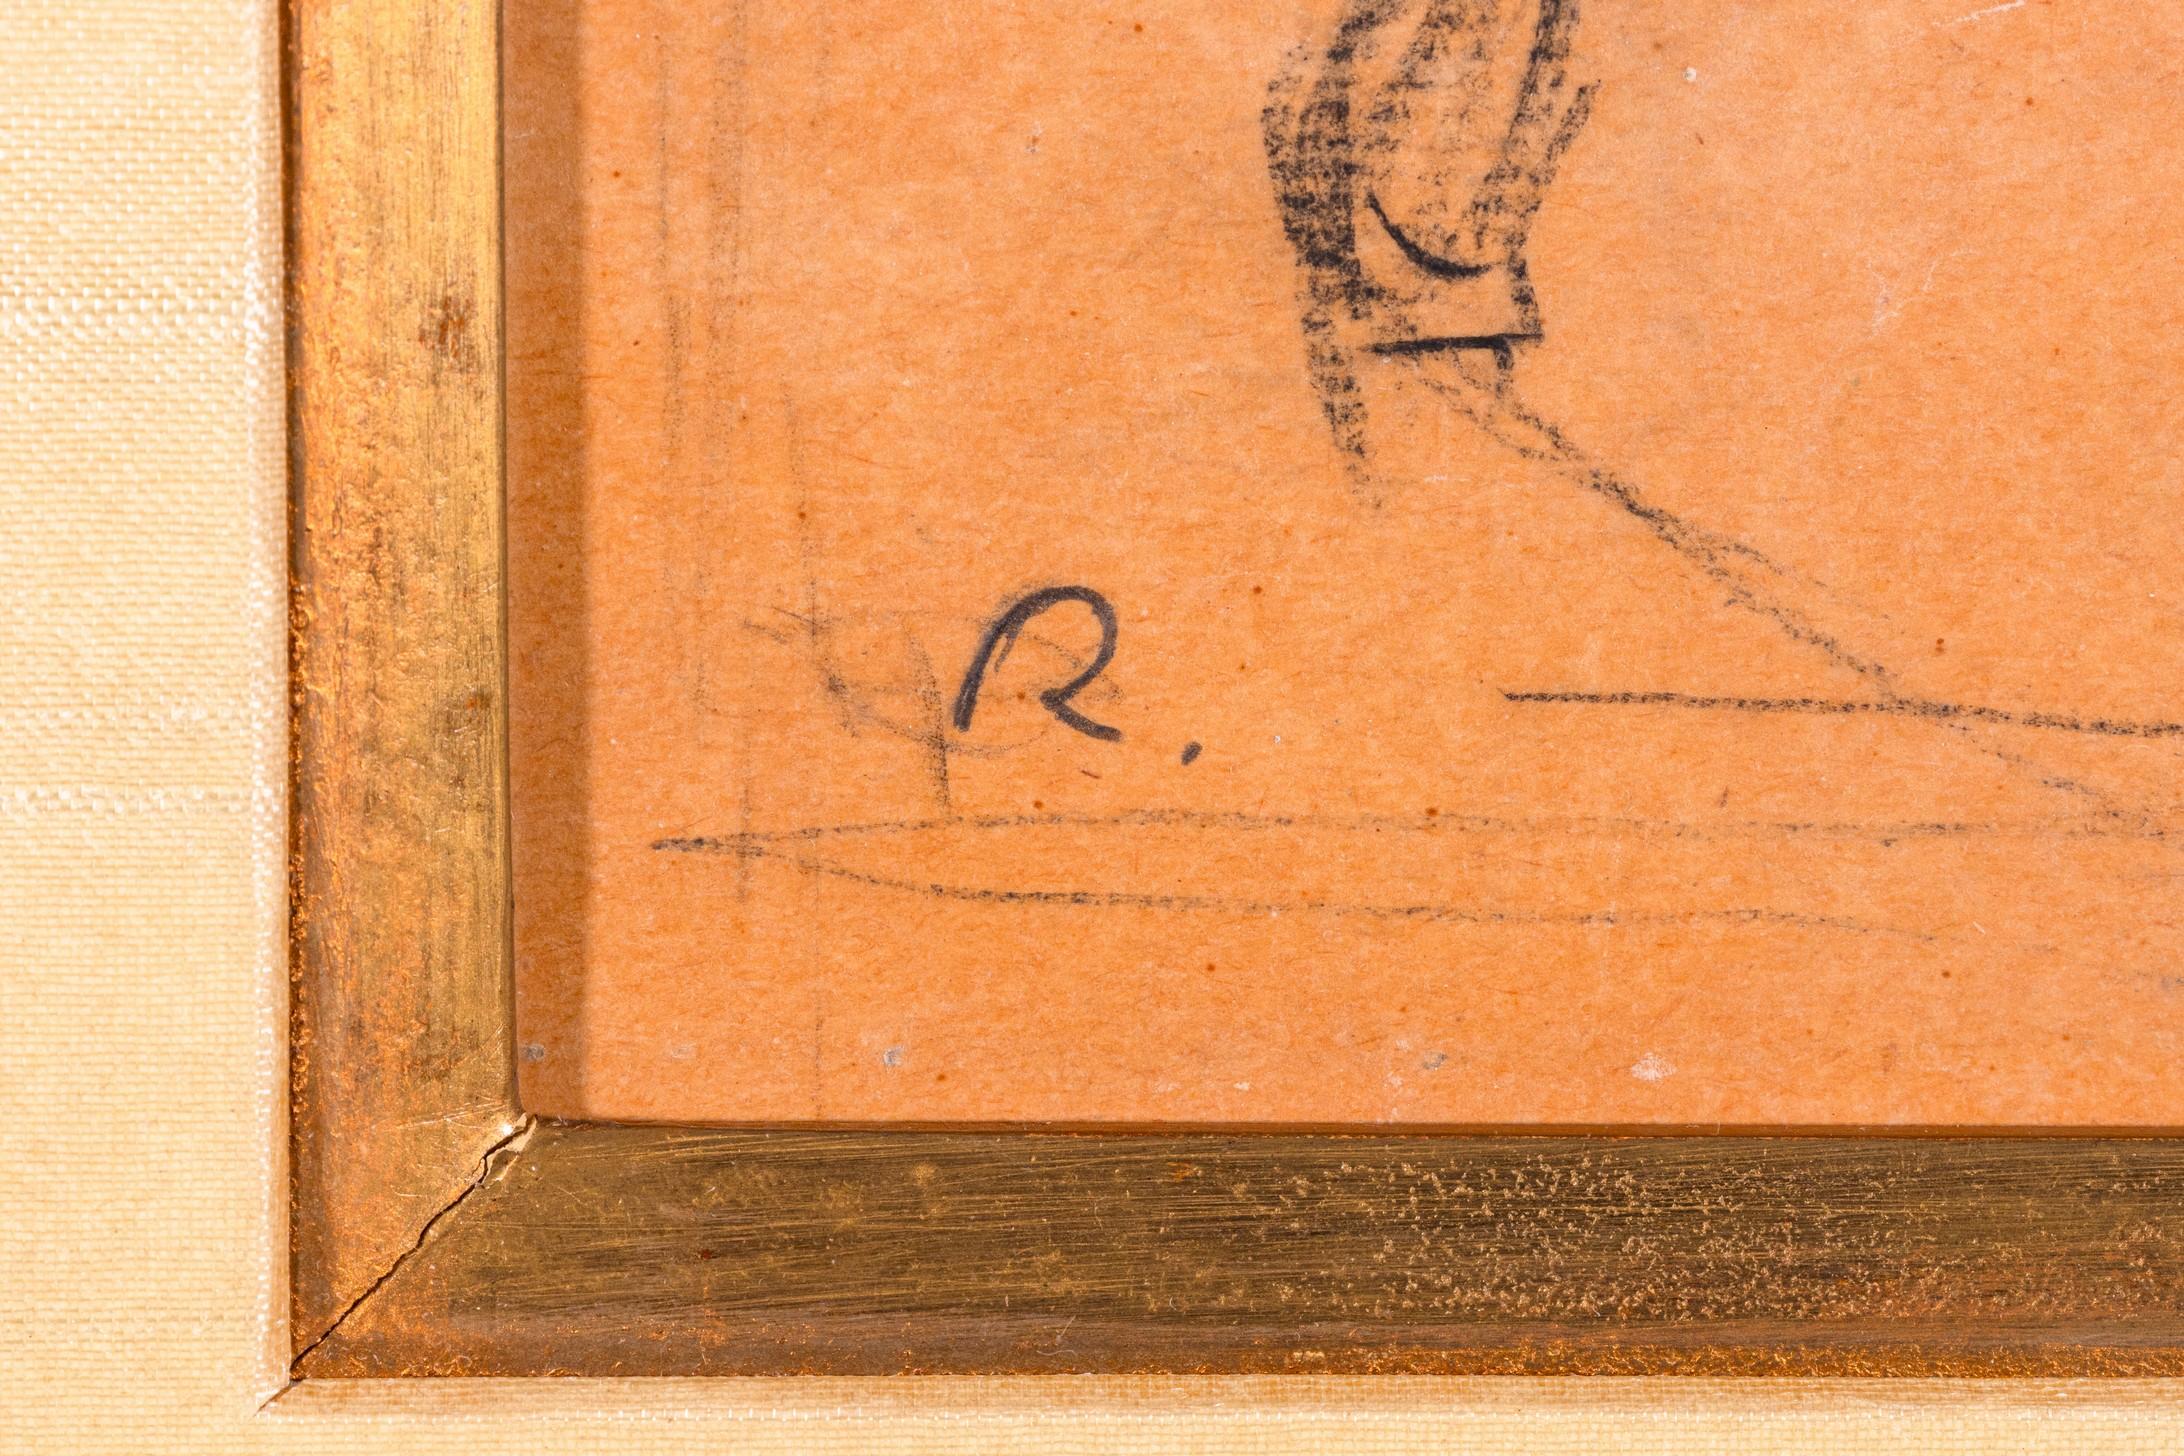 Pierre-Auguste Renoir Madame de Galéa Signed Original Sketch Graphite on Paper For Sale 4